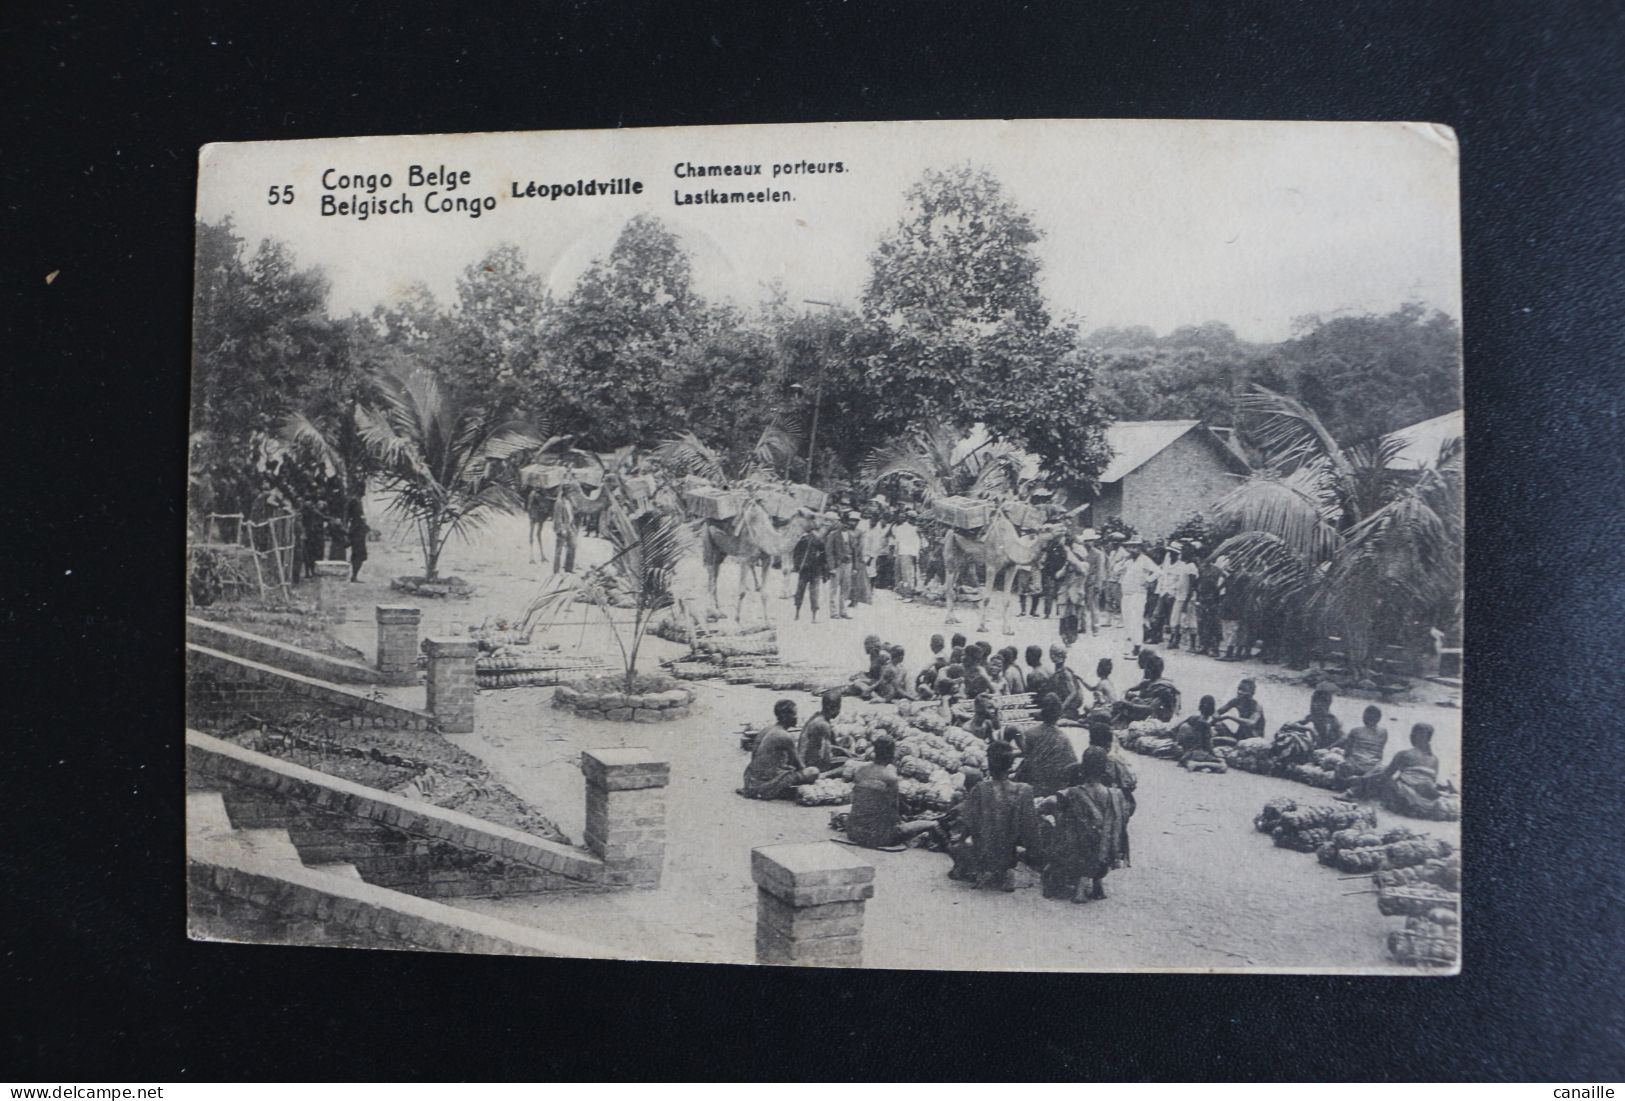 S-C 183 / Congo - Kinshasa (ex Zaire) - Congo Belge  -  Léopoldville Chameaux Porteurs  / 1914 - Kinshasa - Léopoldville